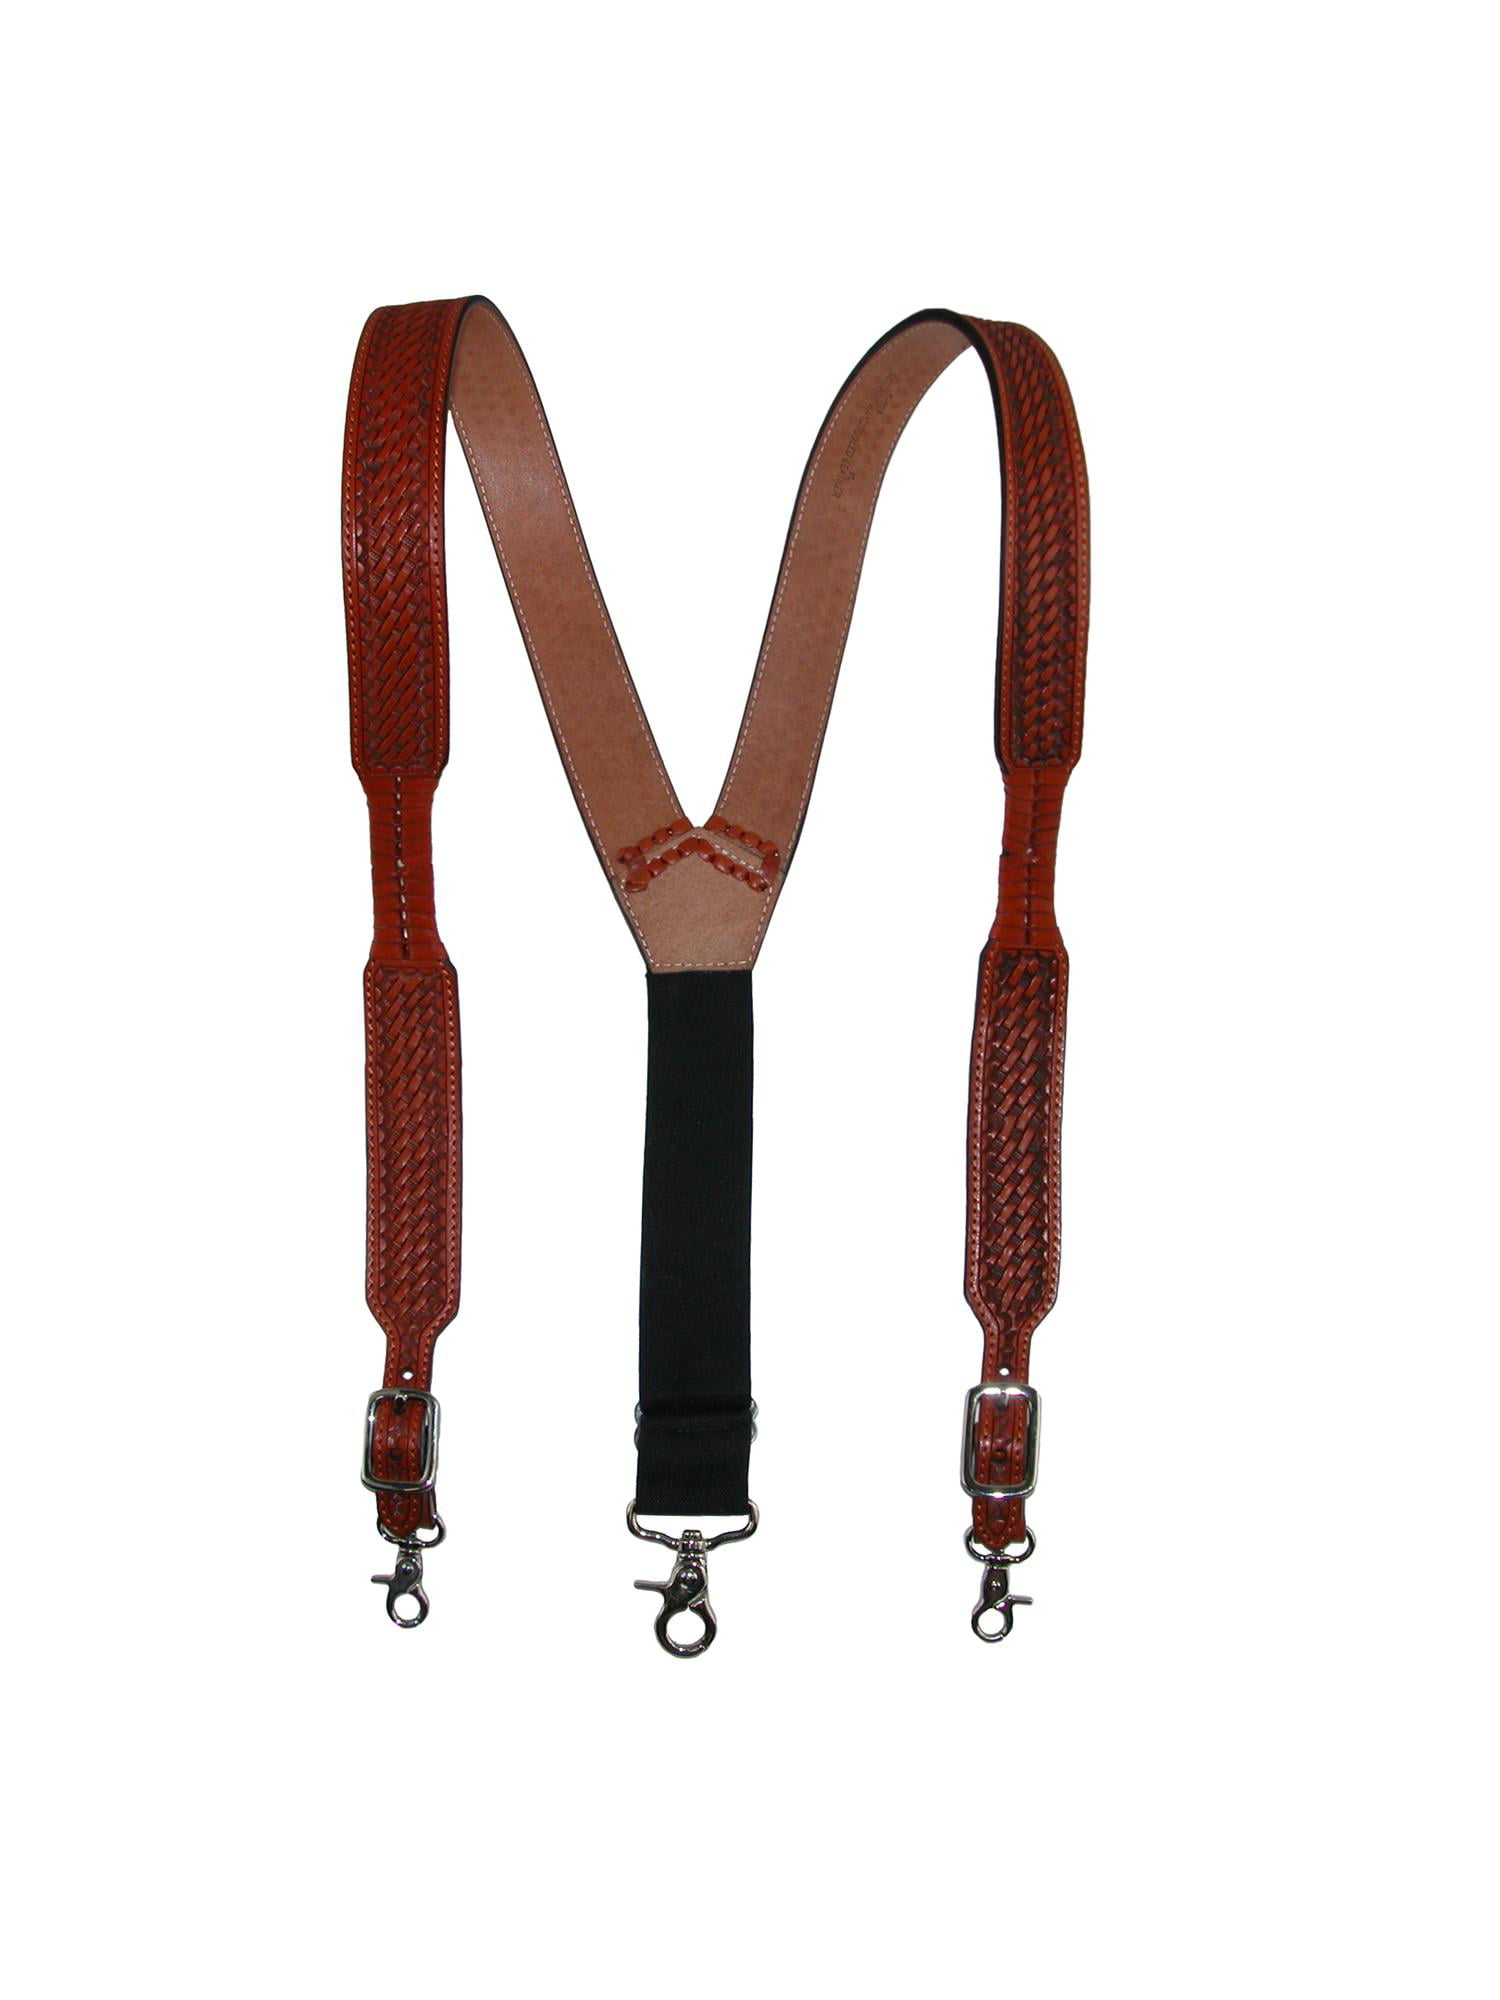 Leather Hook Suspenders Men Buckle Braces Black Brown Strap Accessory 